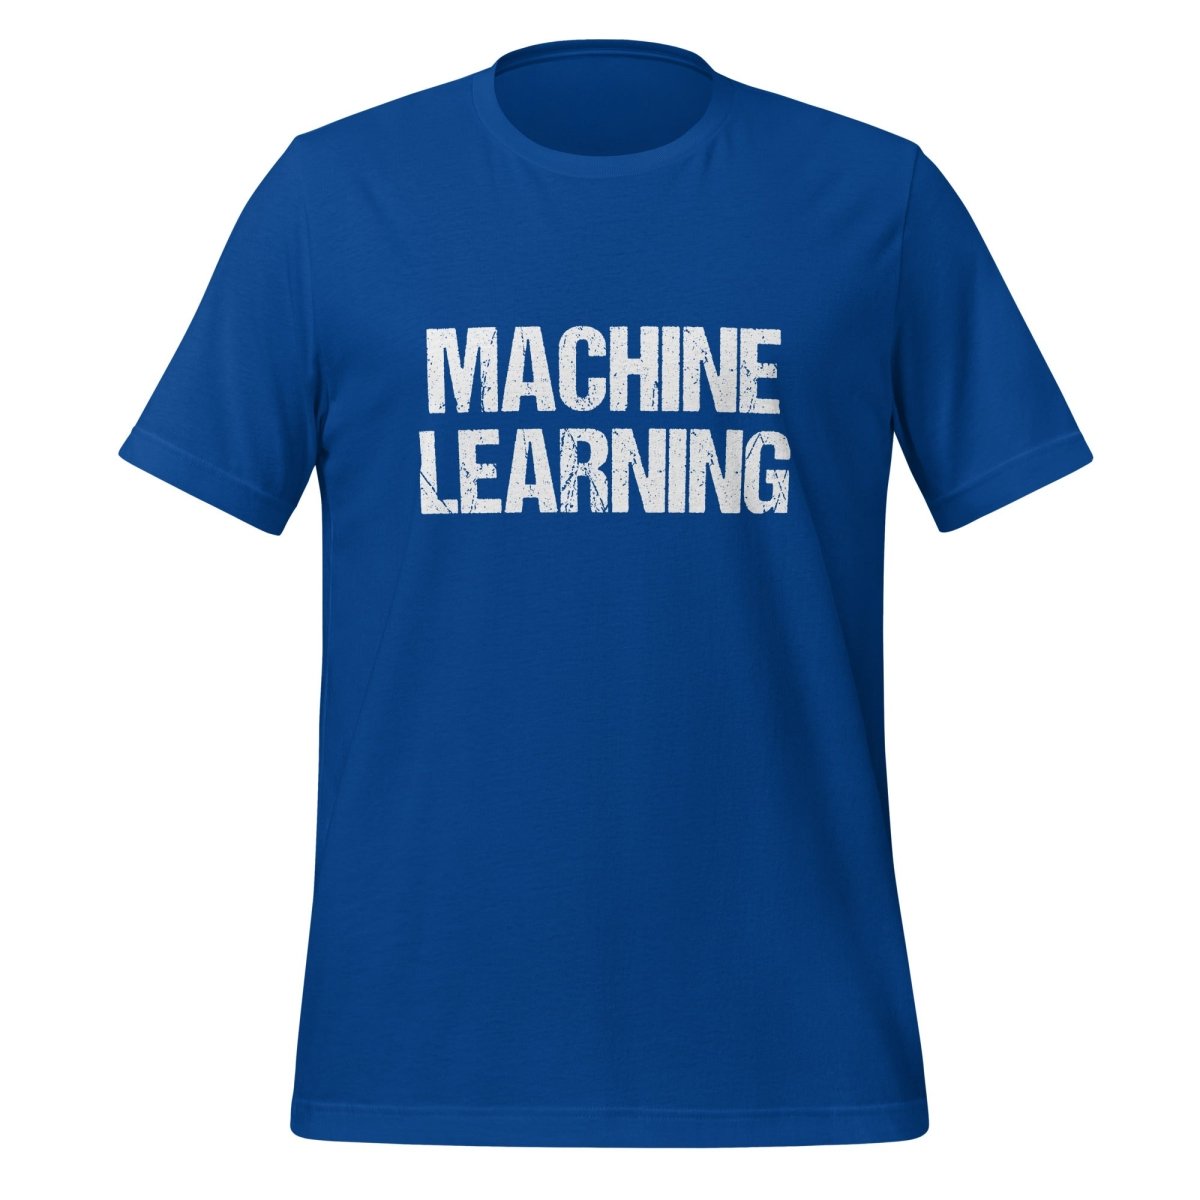 Machine Learning Distressed T - Shirt (unisex) - True Royal - AI Store